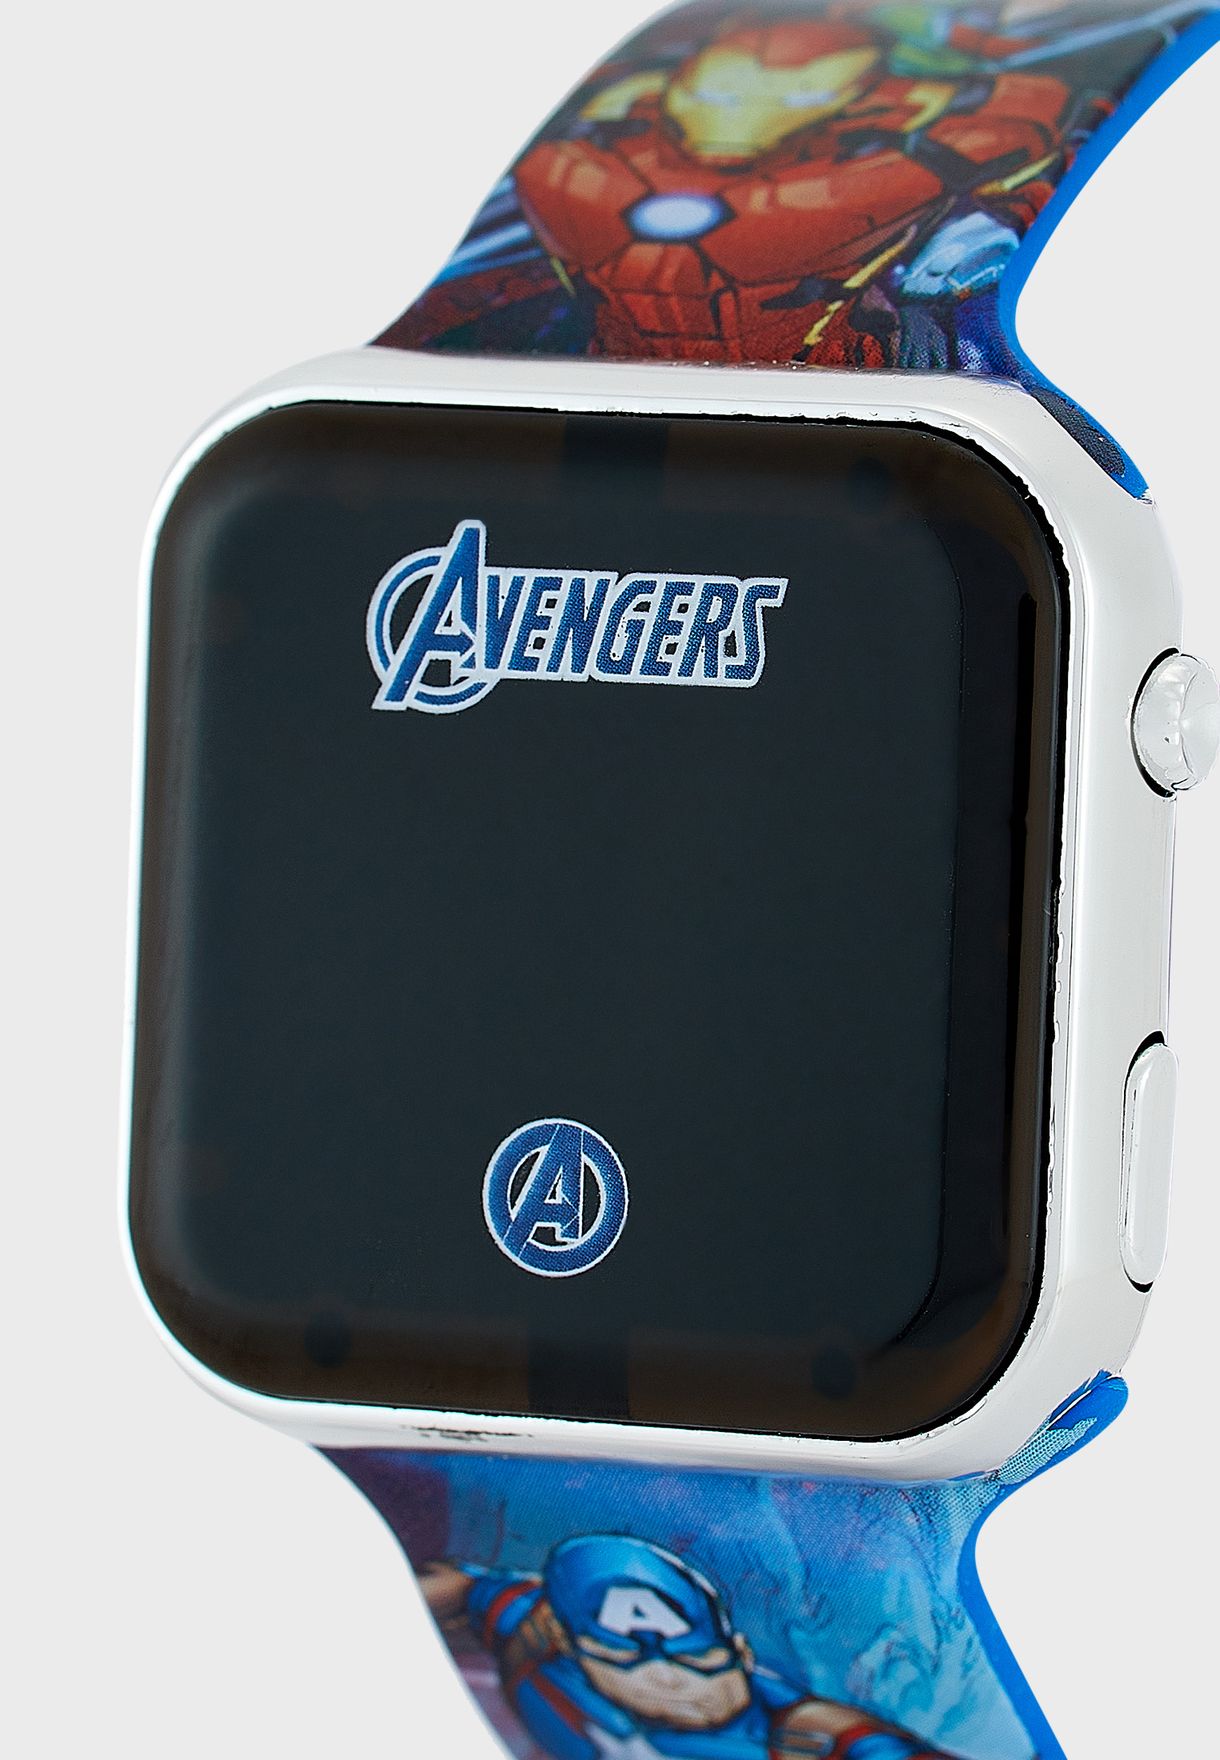 Kids Avengers Digital Watch
